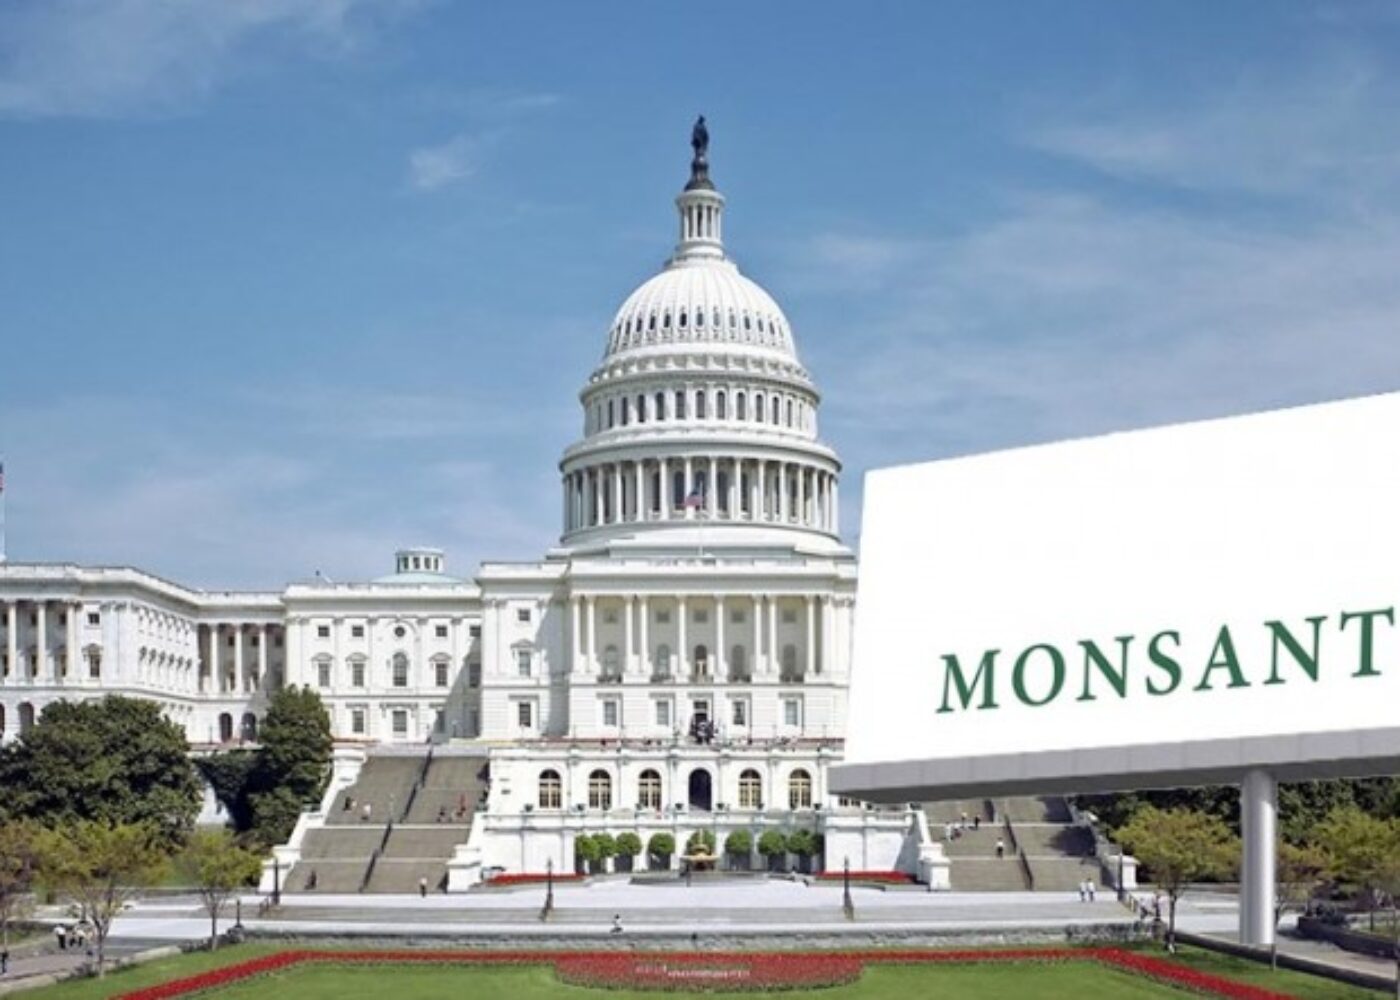 The Monsanto Congress